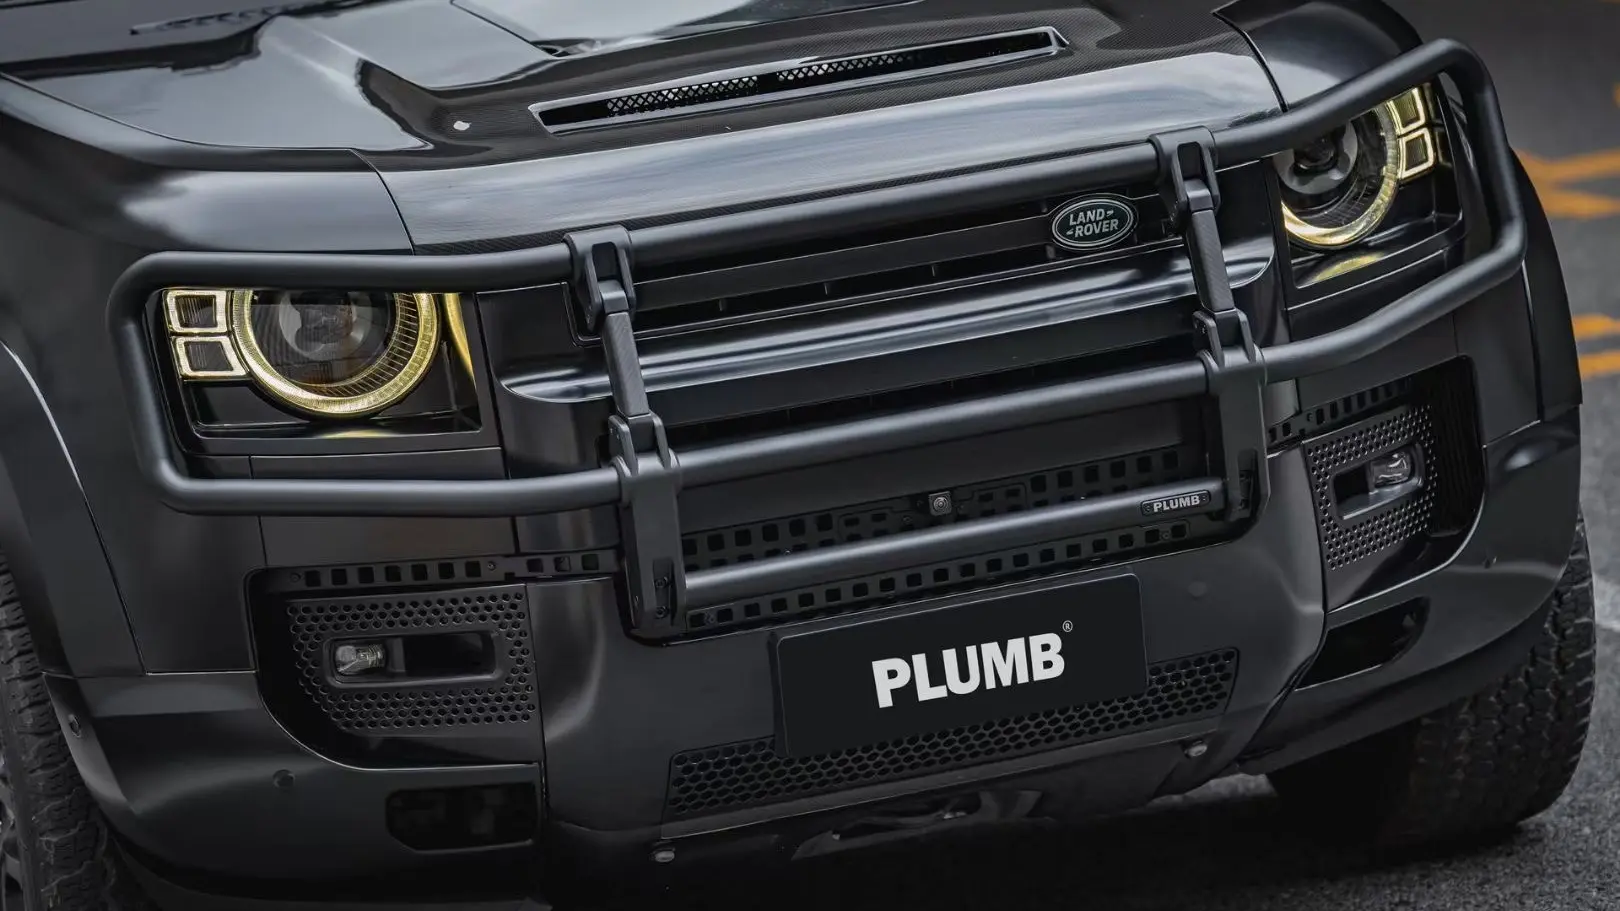 PLUMB Frontstoßstange Bull Bar für Land Rover Defender Bild